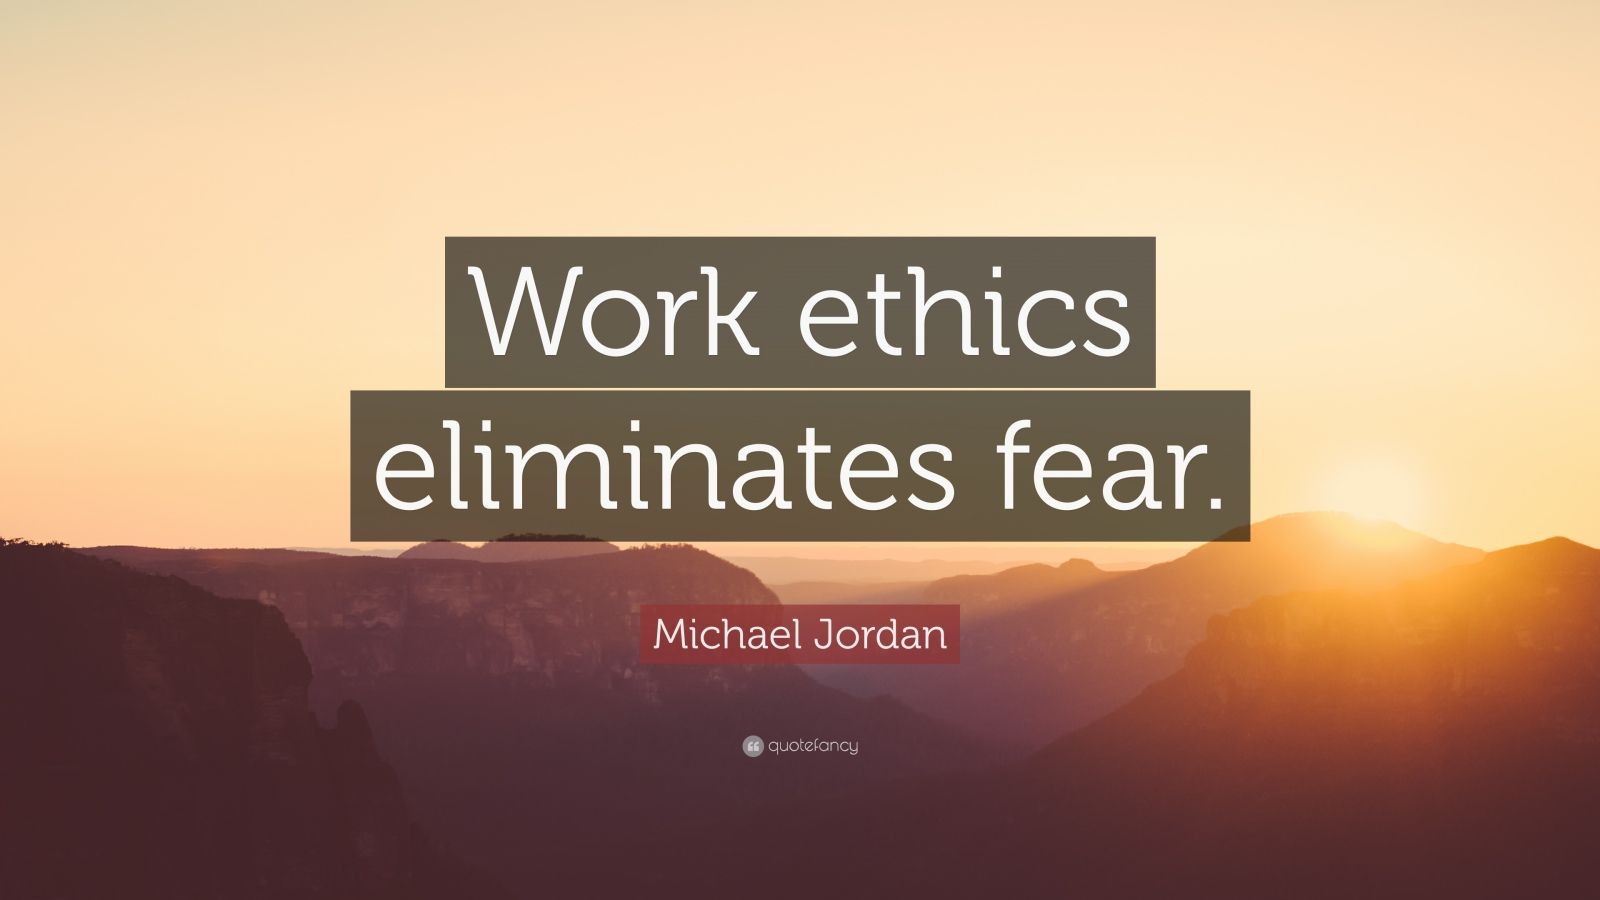 Michael Jordan Quote: “Work ethics .quotefancy.com